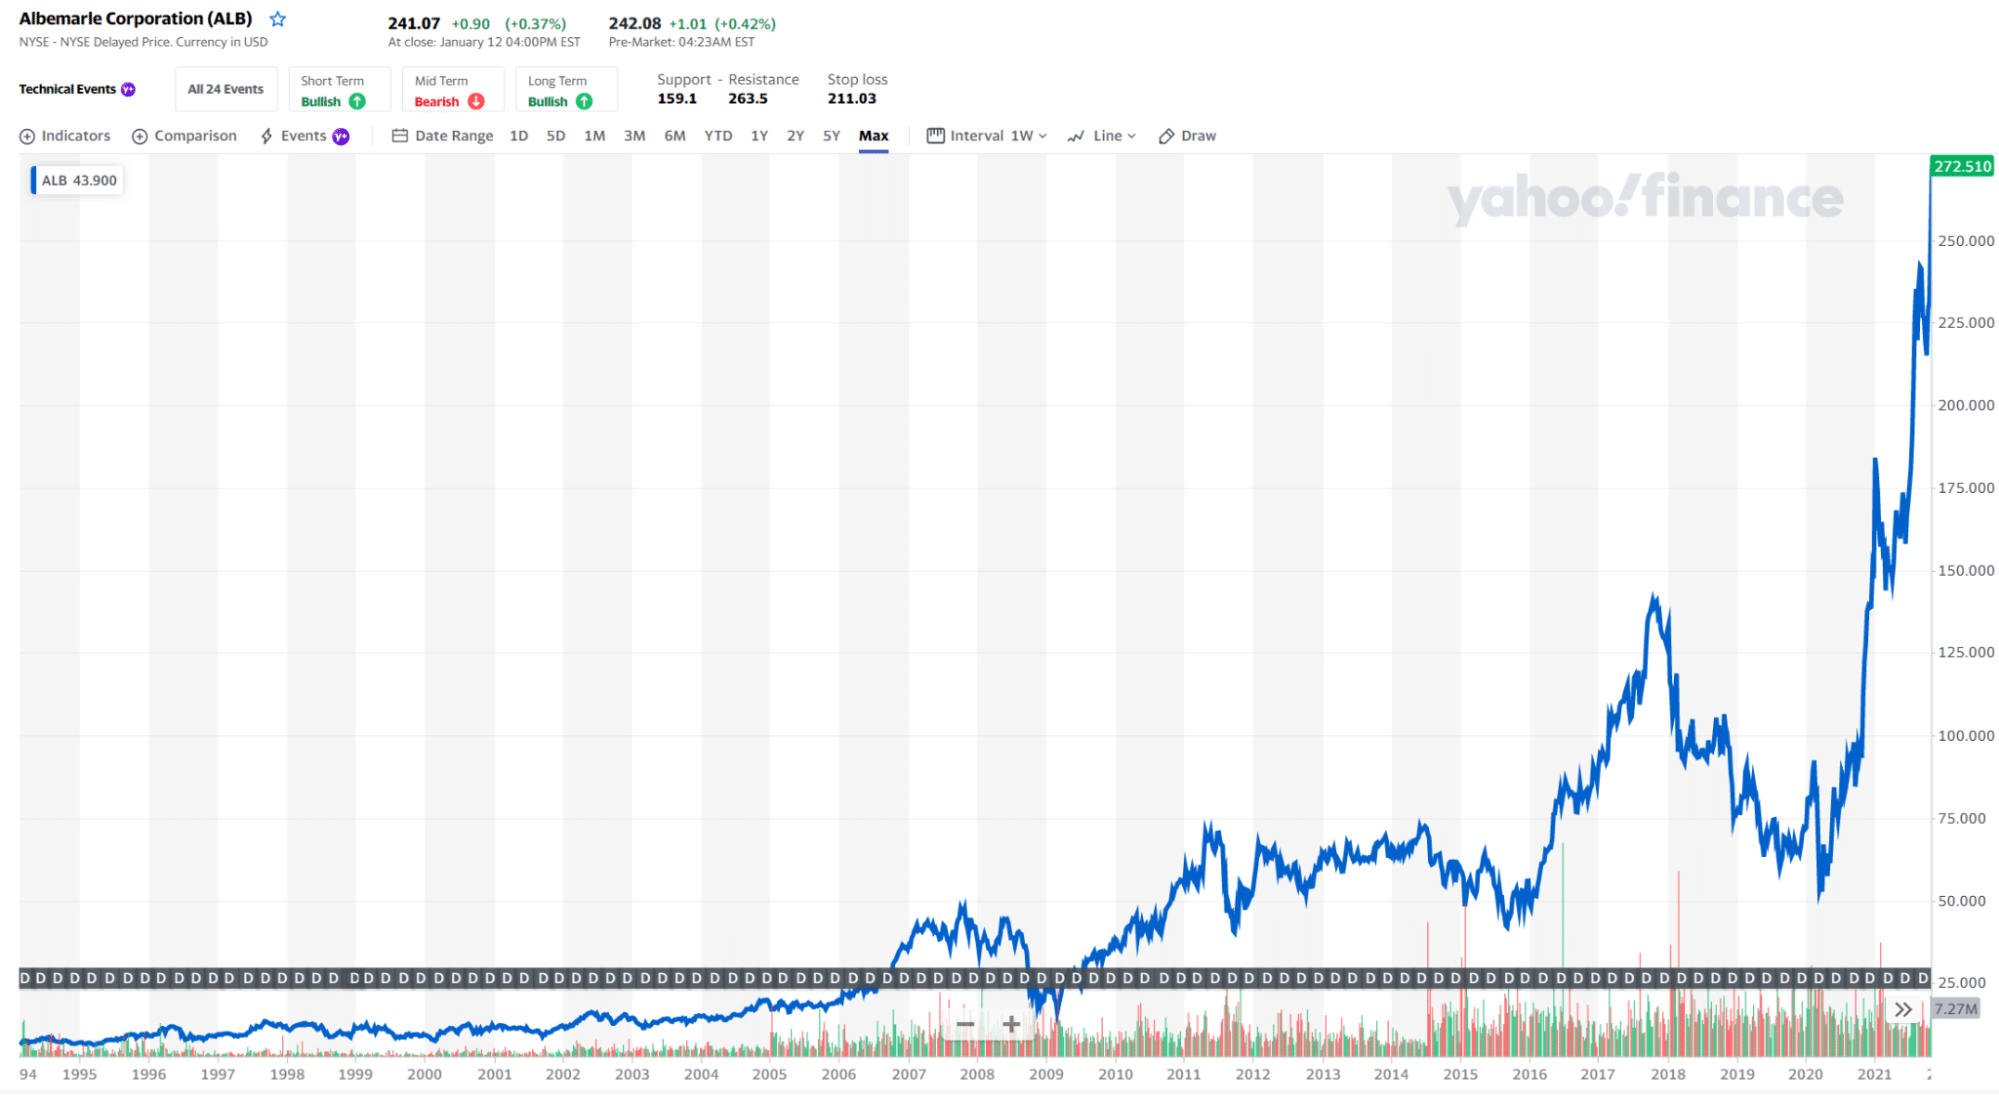 ALB stock price chart 1995-2022